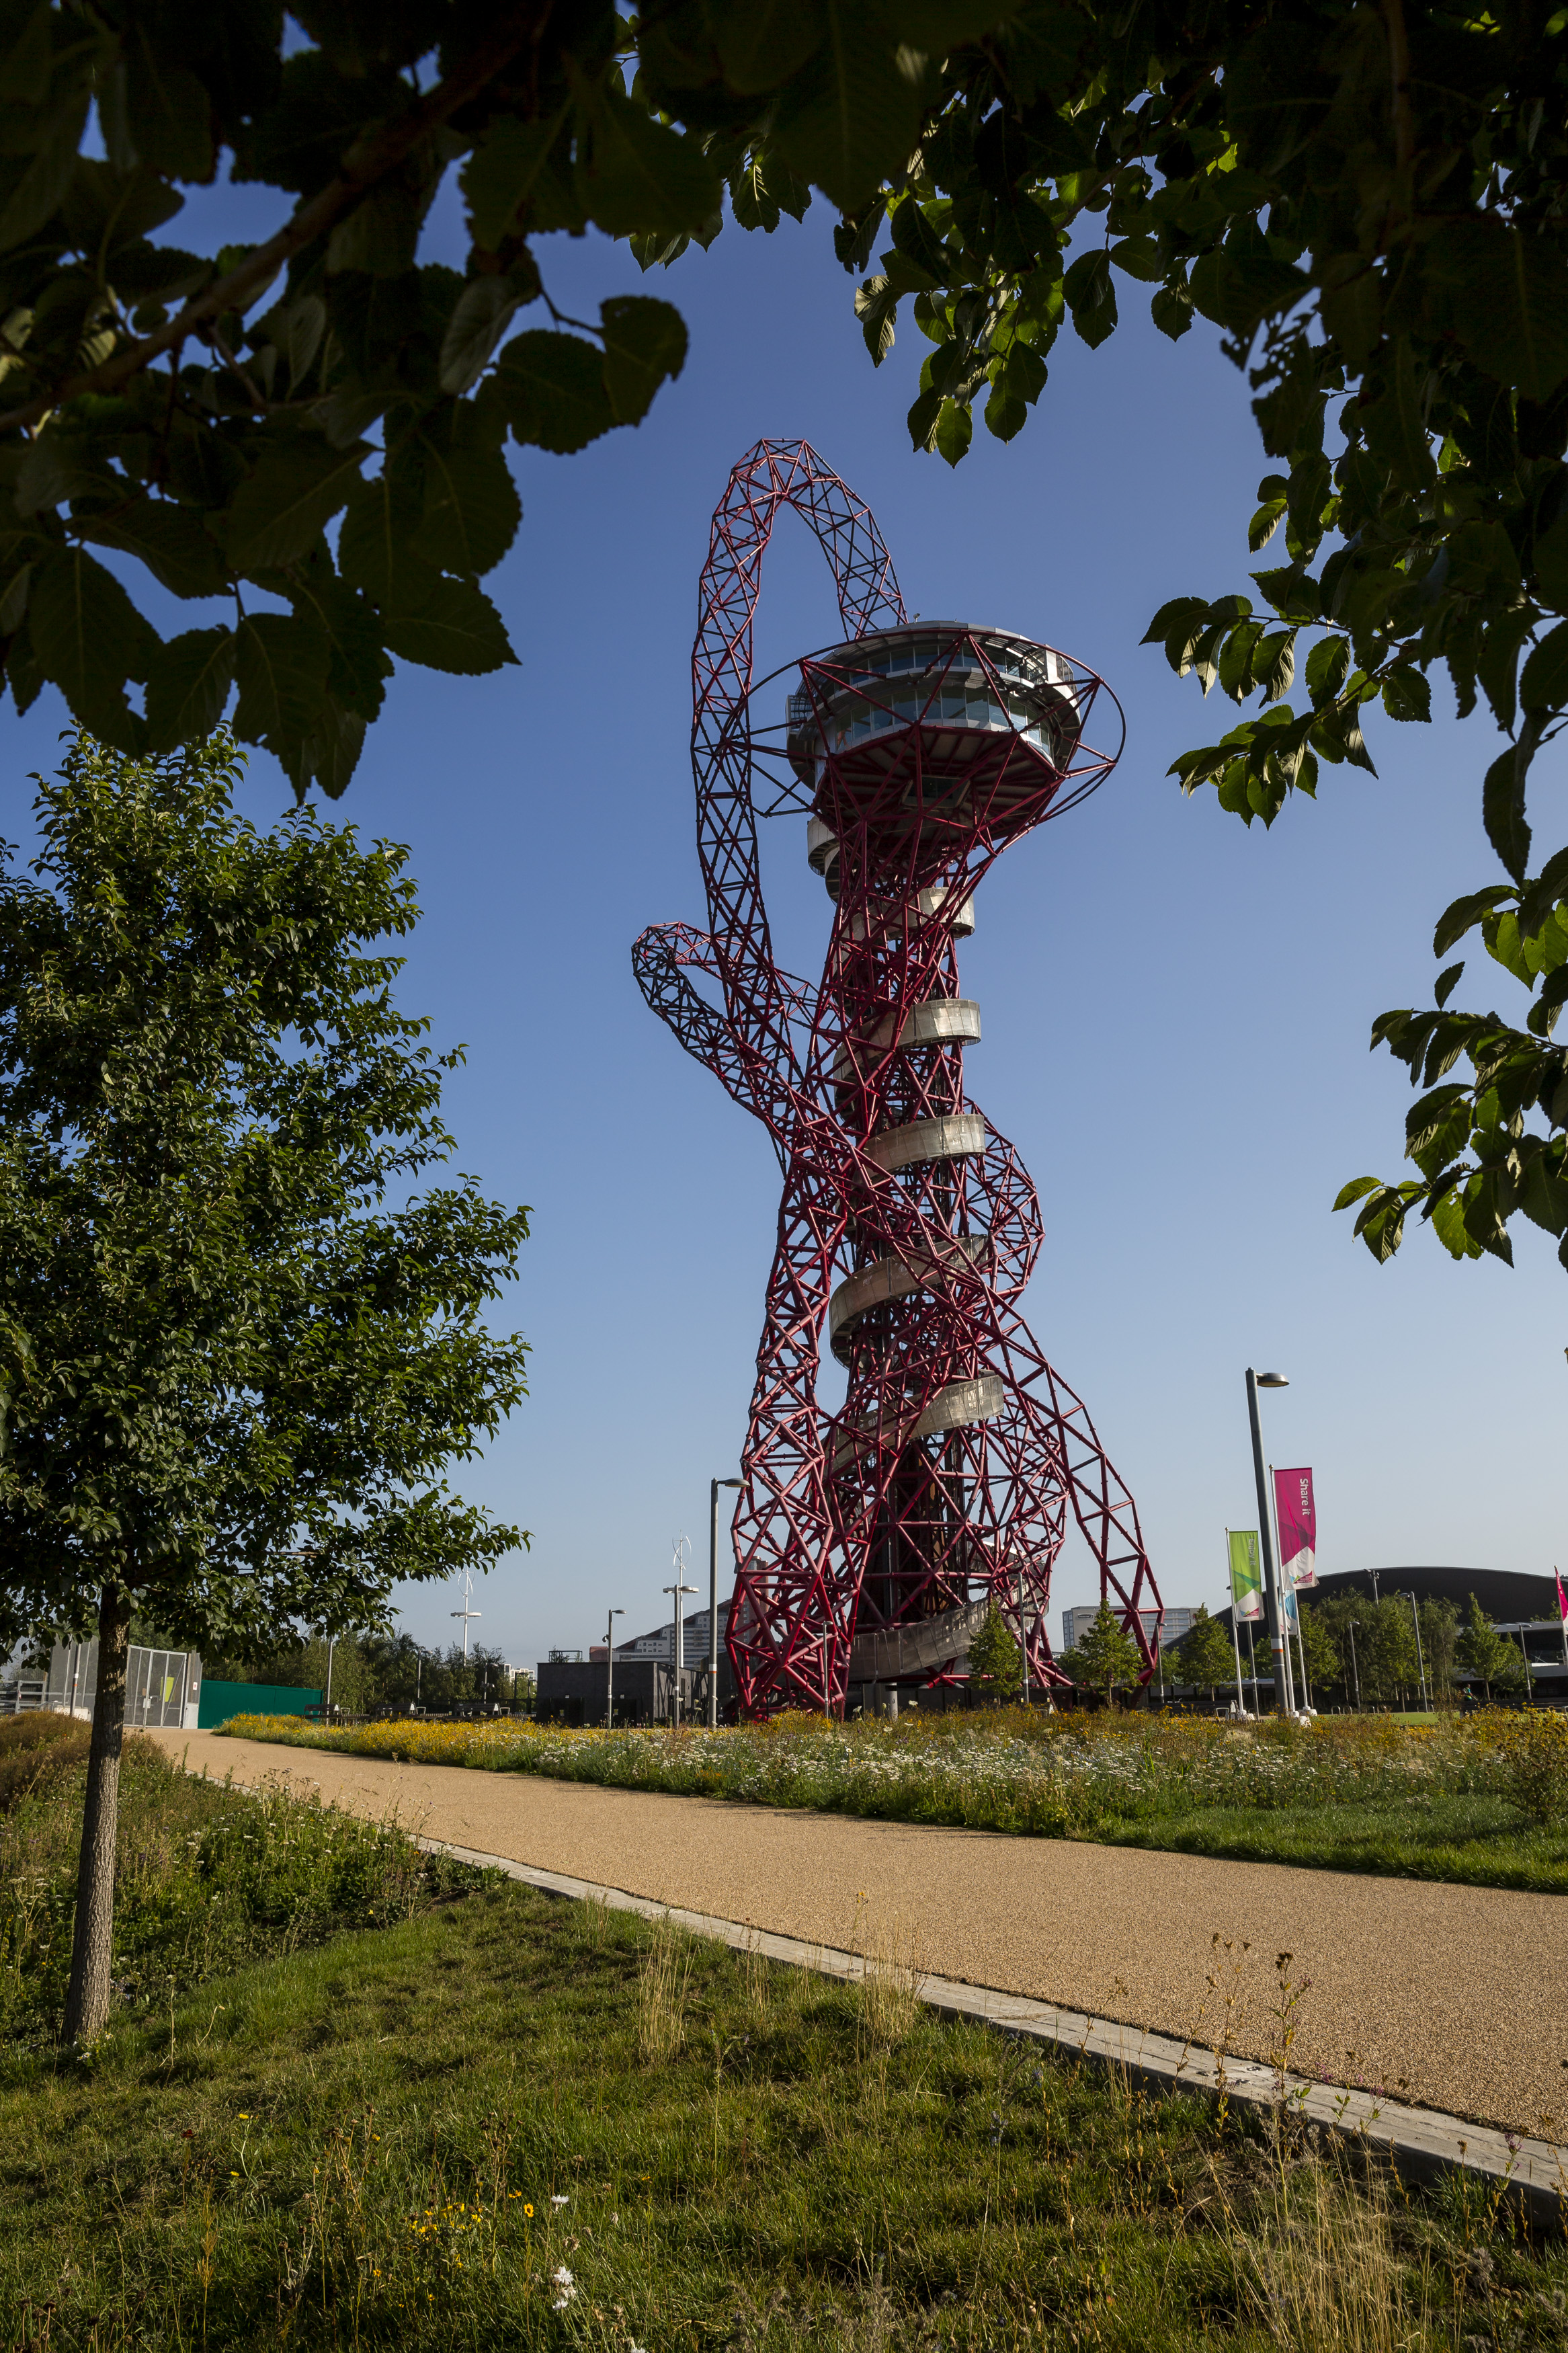 The Arcelormittal Orbit sculpture at the Queen Elizabeth II Olympic Park. (Credit: Queen Elizabeth Olympic Park/London Legacy Development Corporation)